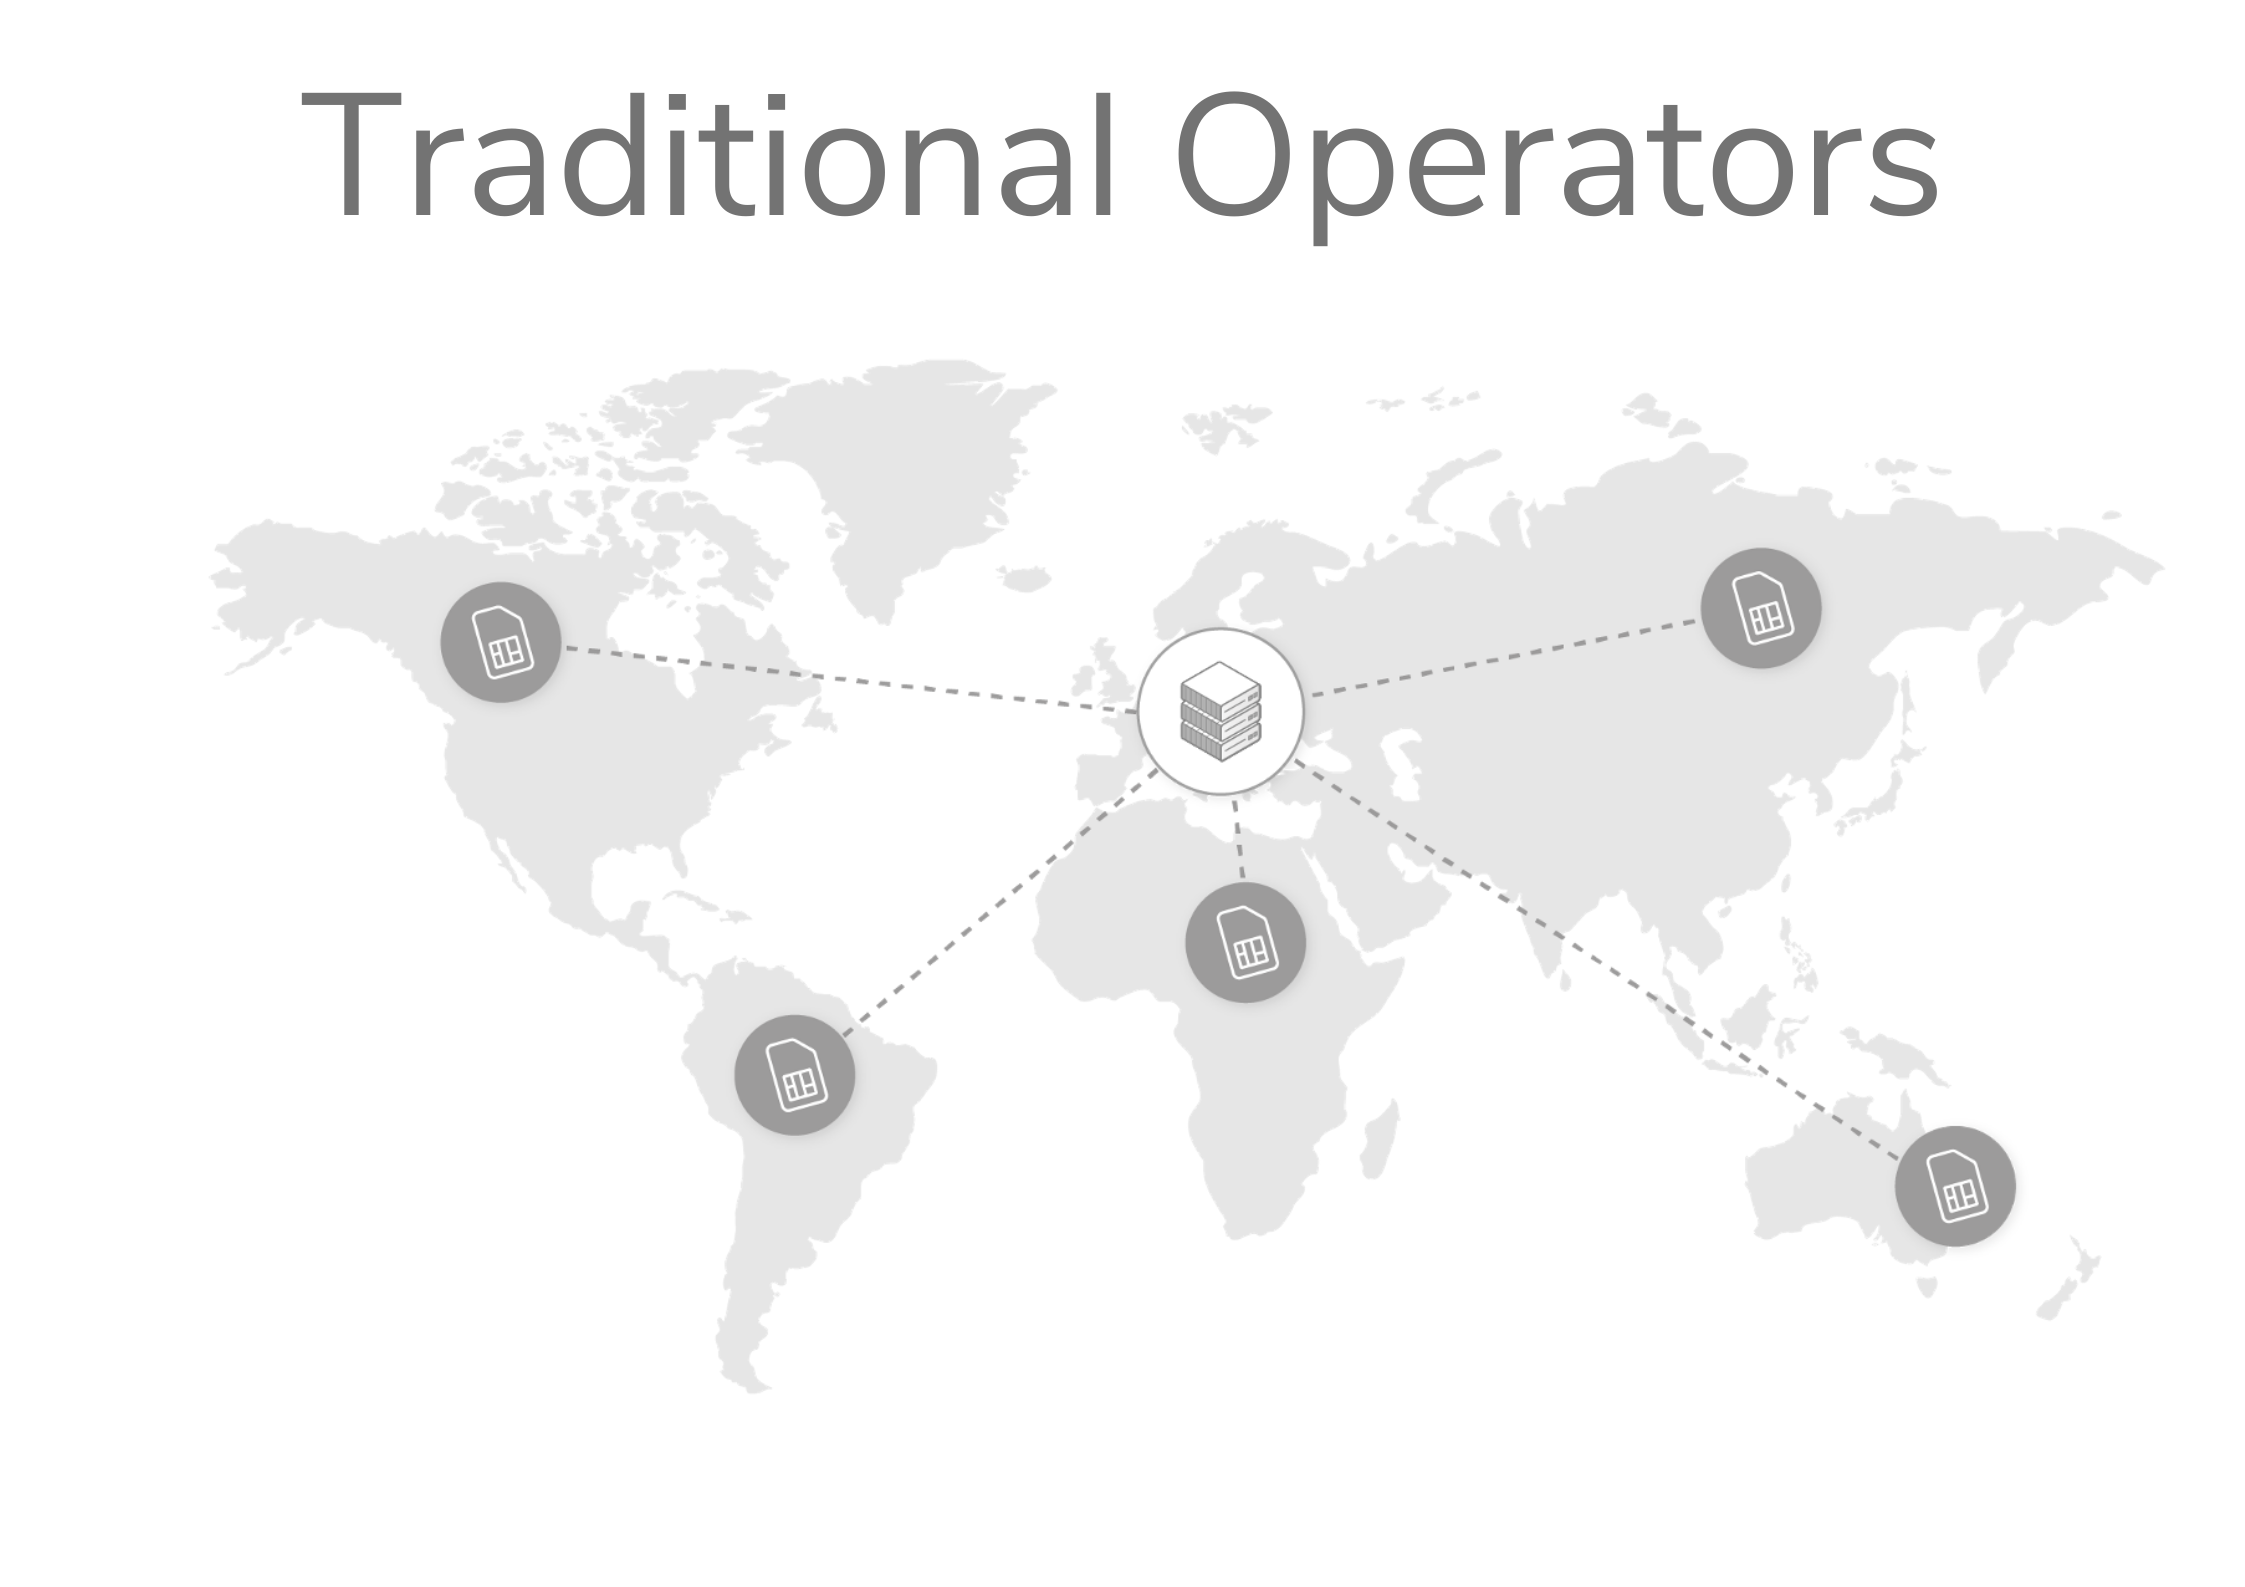 Traditional operators